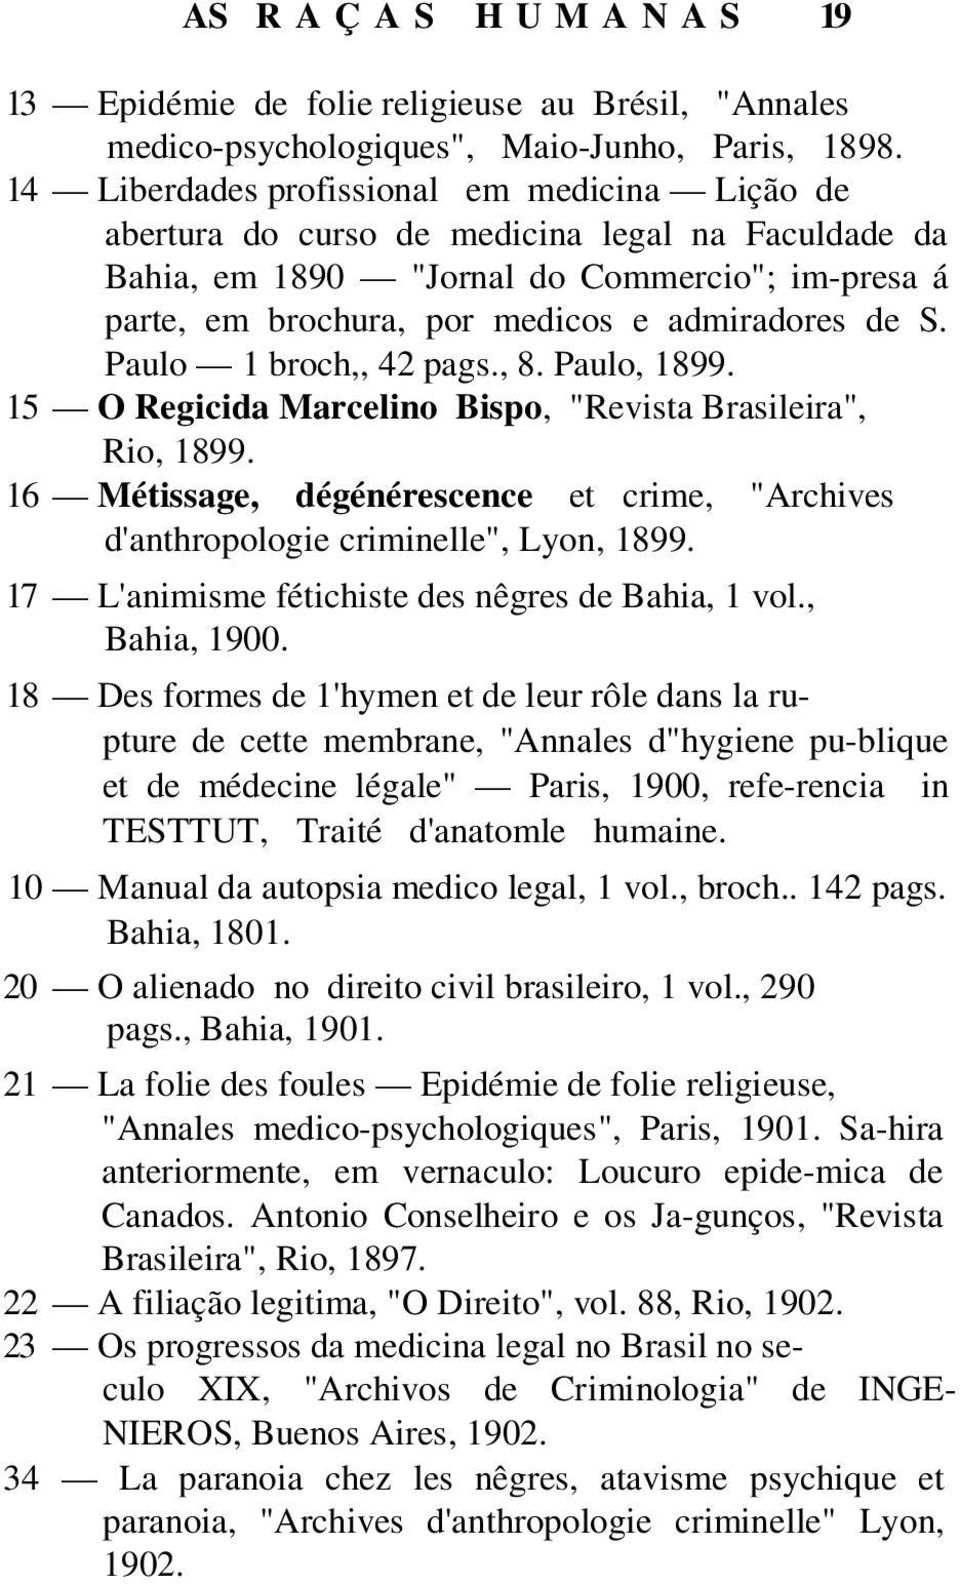 Paulo 1 broch,, 42 pags., 8. Paulo, 1899. 15 O Regicida Marcelino Bispo, "Revista Brasileira", Rio, 1899. 16 Métissage, dégénérescence et crime, "Archives d'anthropologie criminelle", Lyon, 1899.